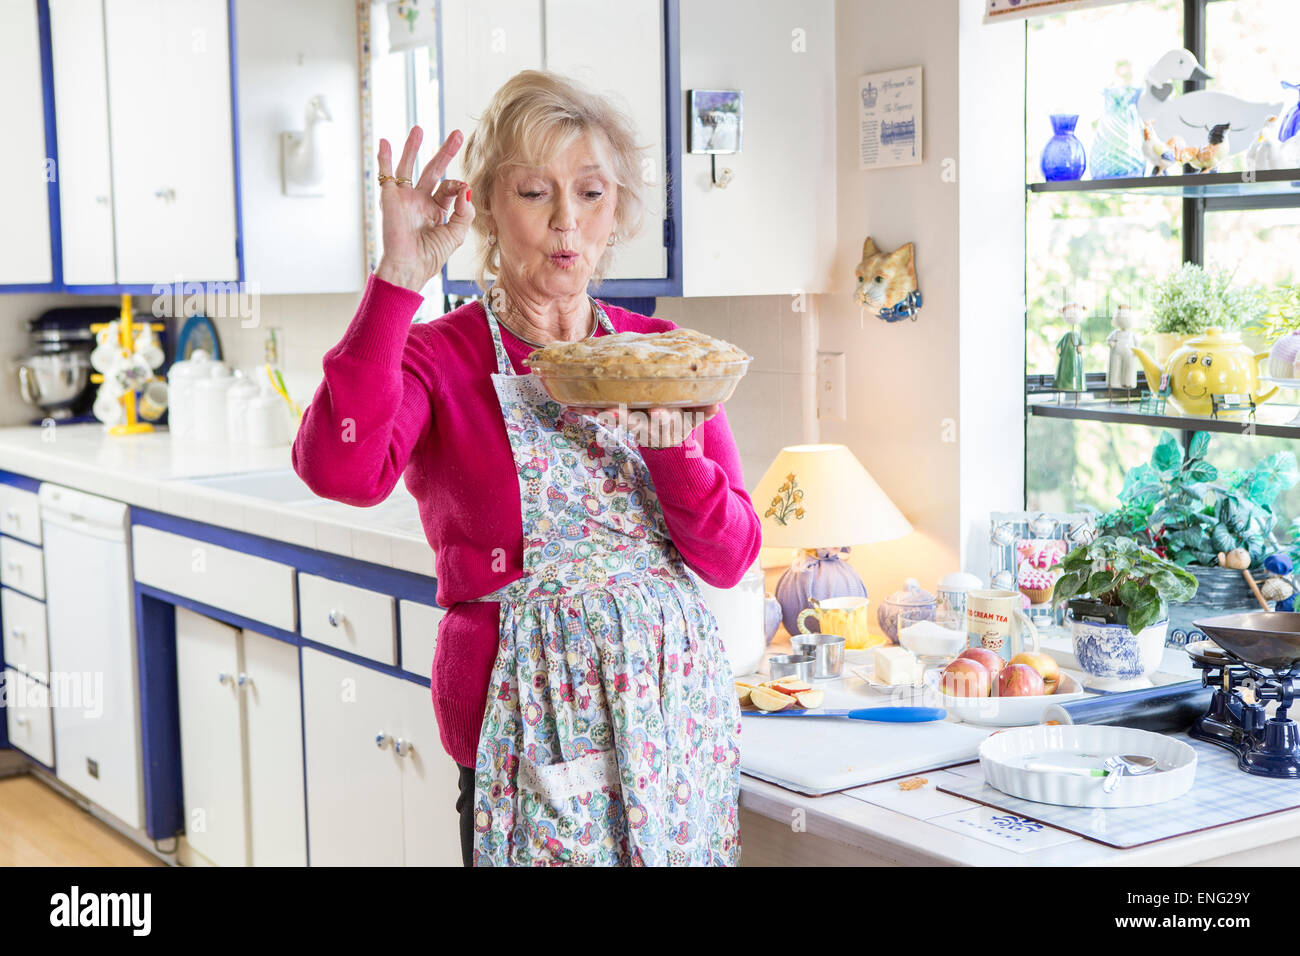 Older Caucasian woman baking pie in kitchen Stock Photo